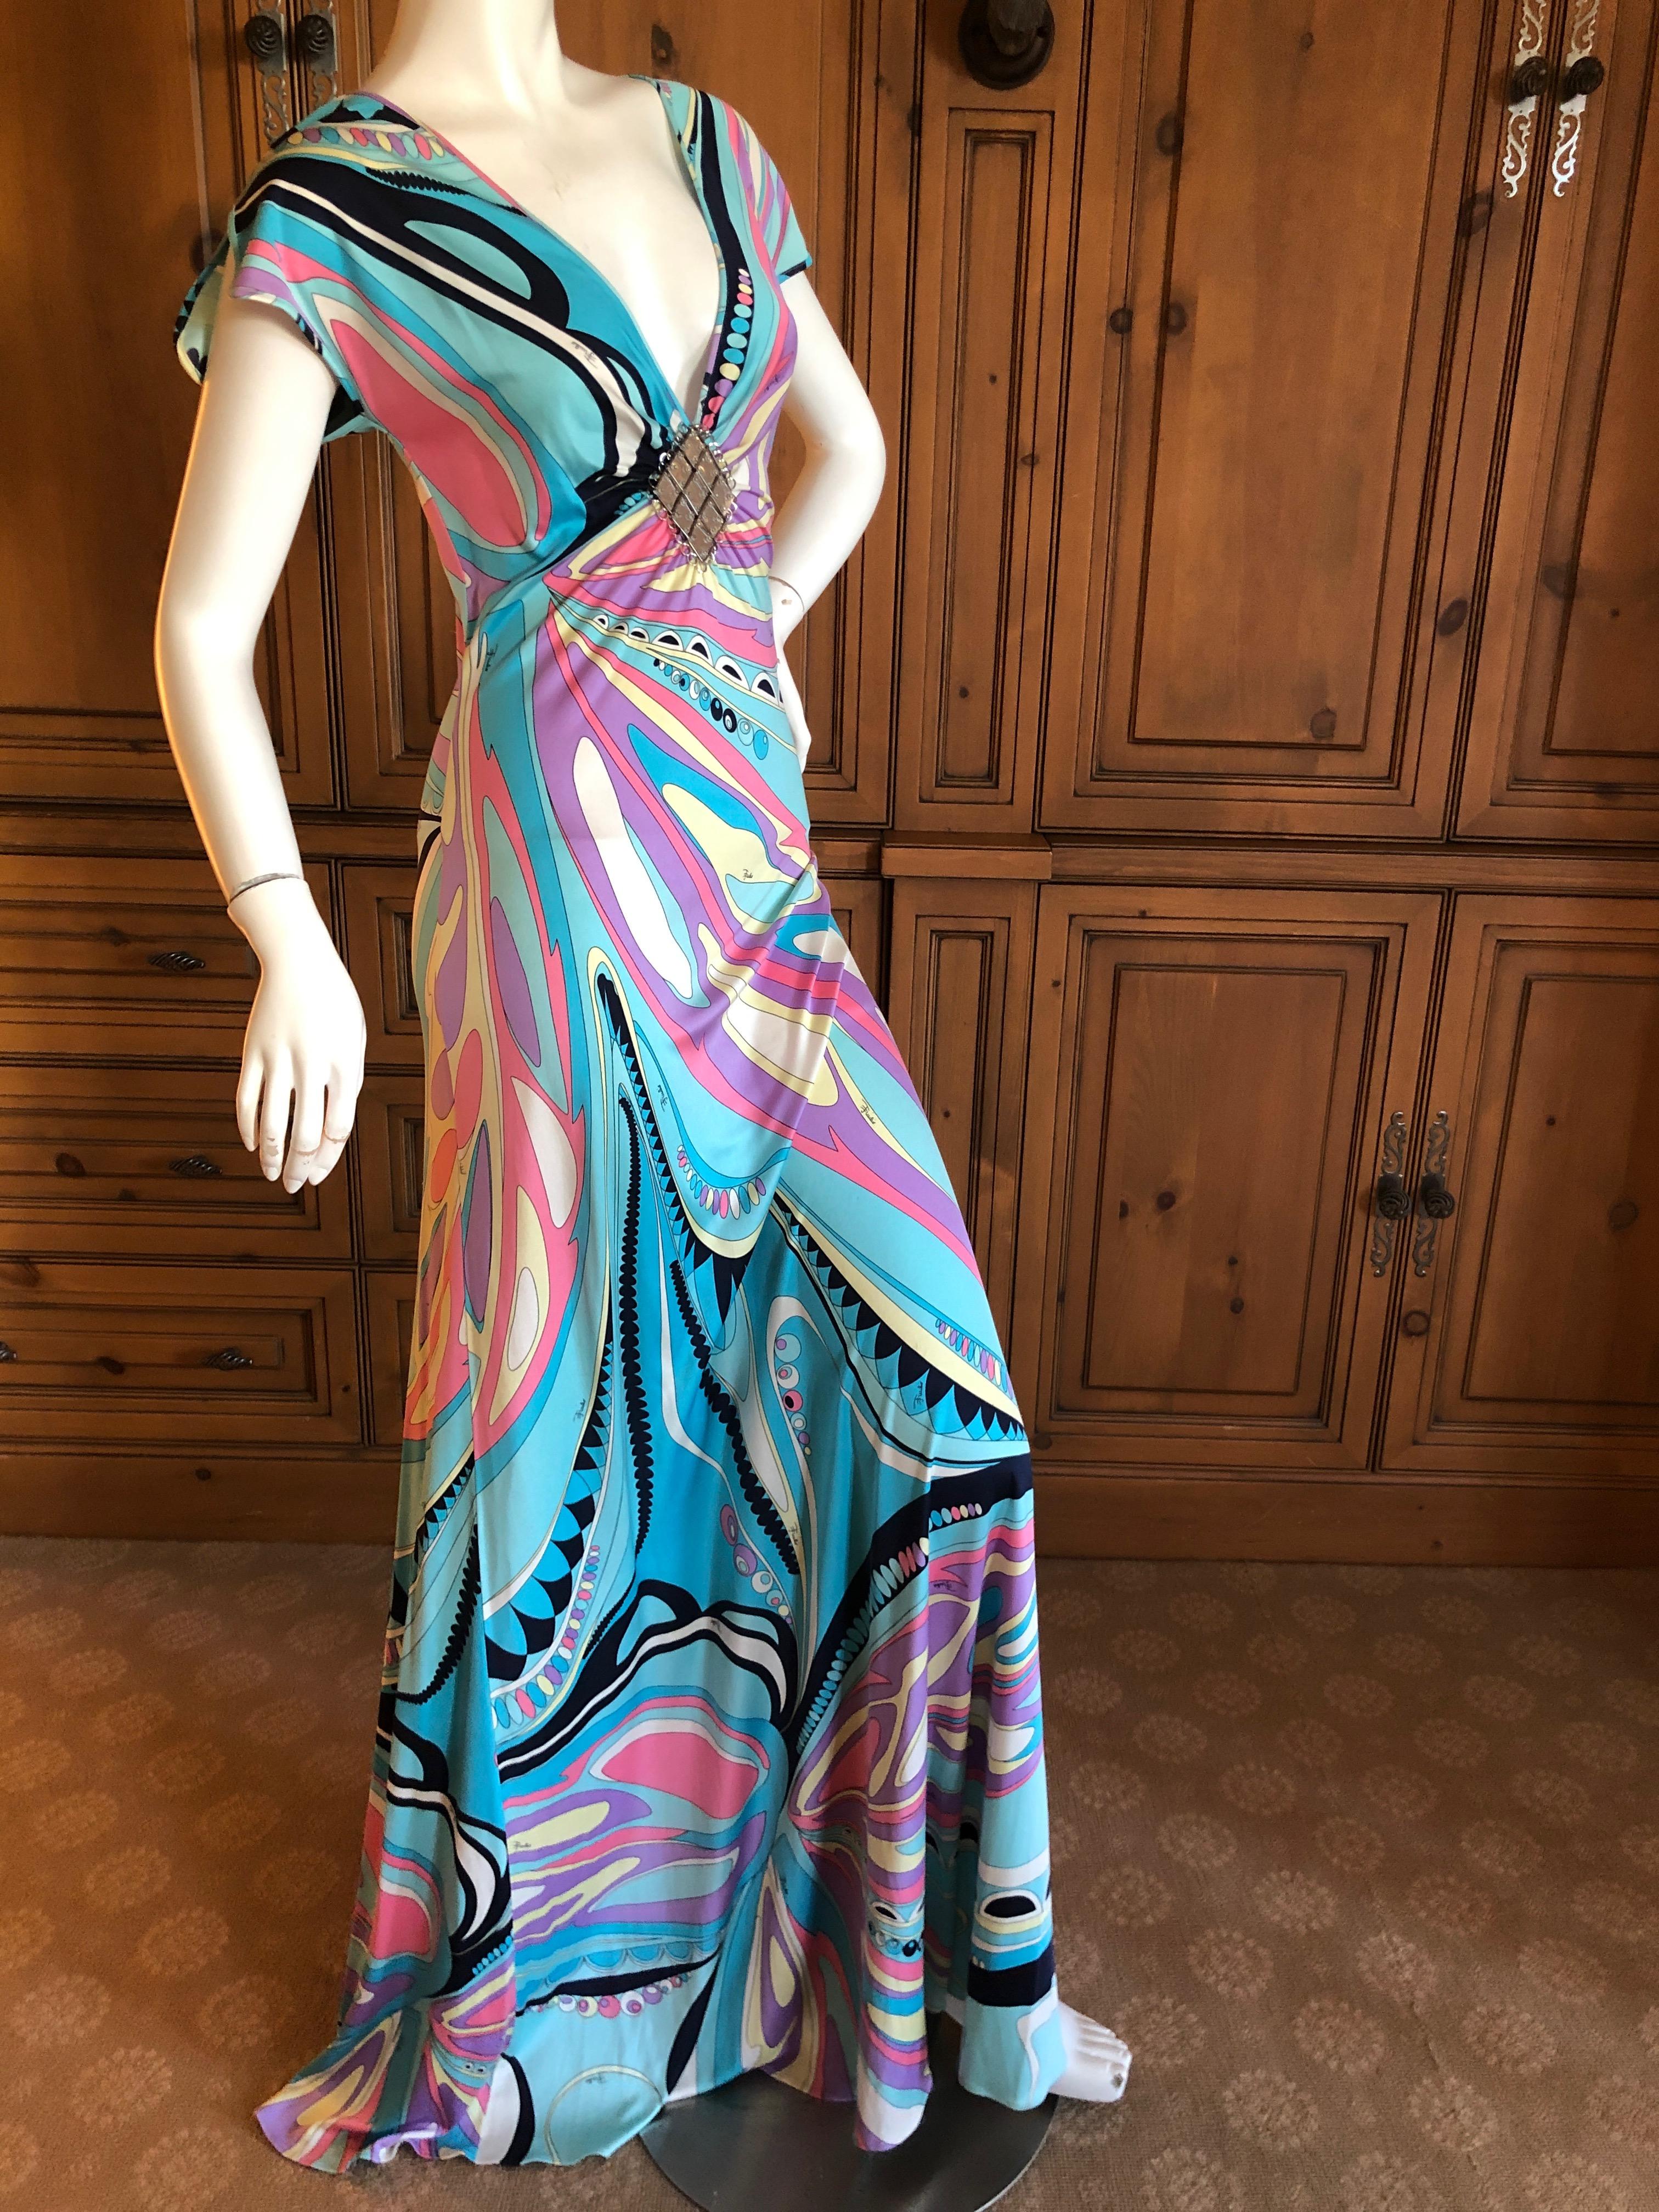 Emilio Pucci Wonderful Low Cut Embellished Silk Jersey Evening Dress
Size 6 US
Bust 36